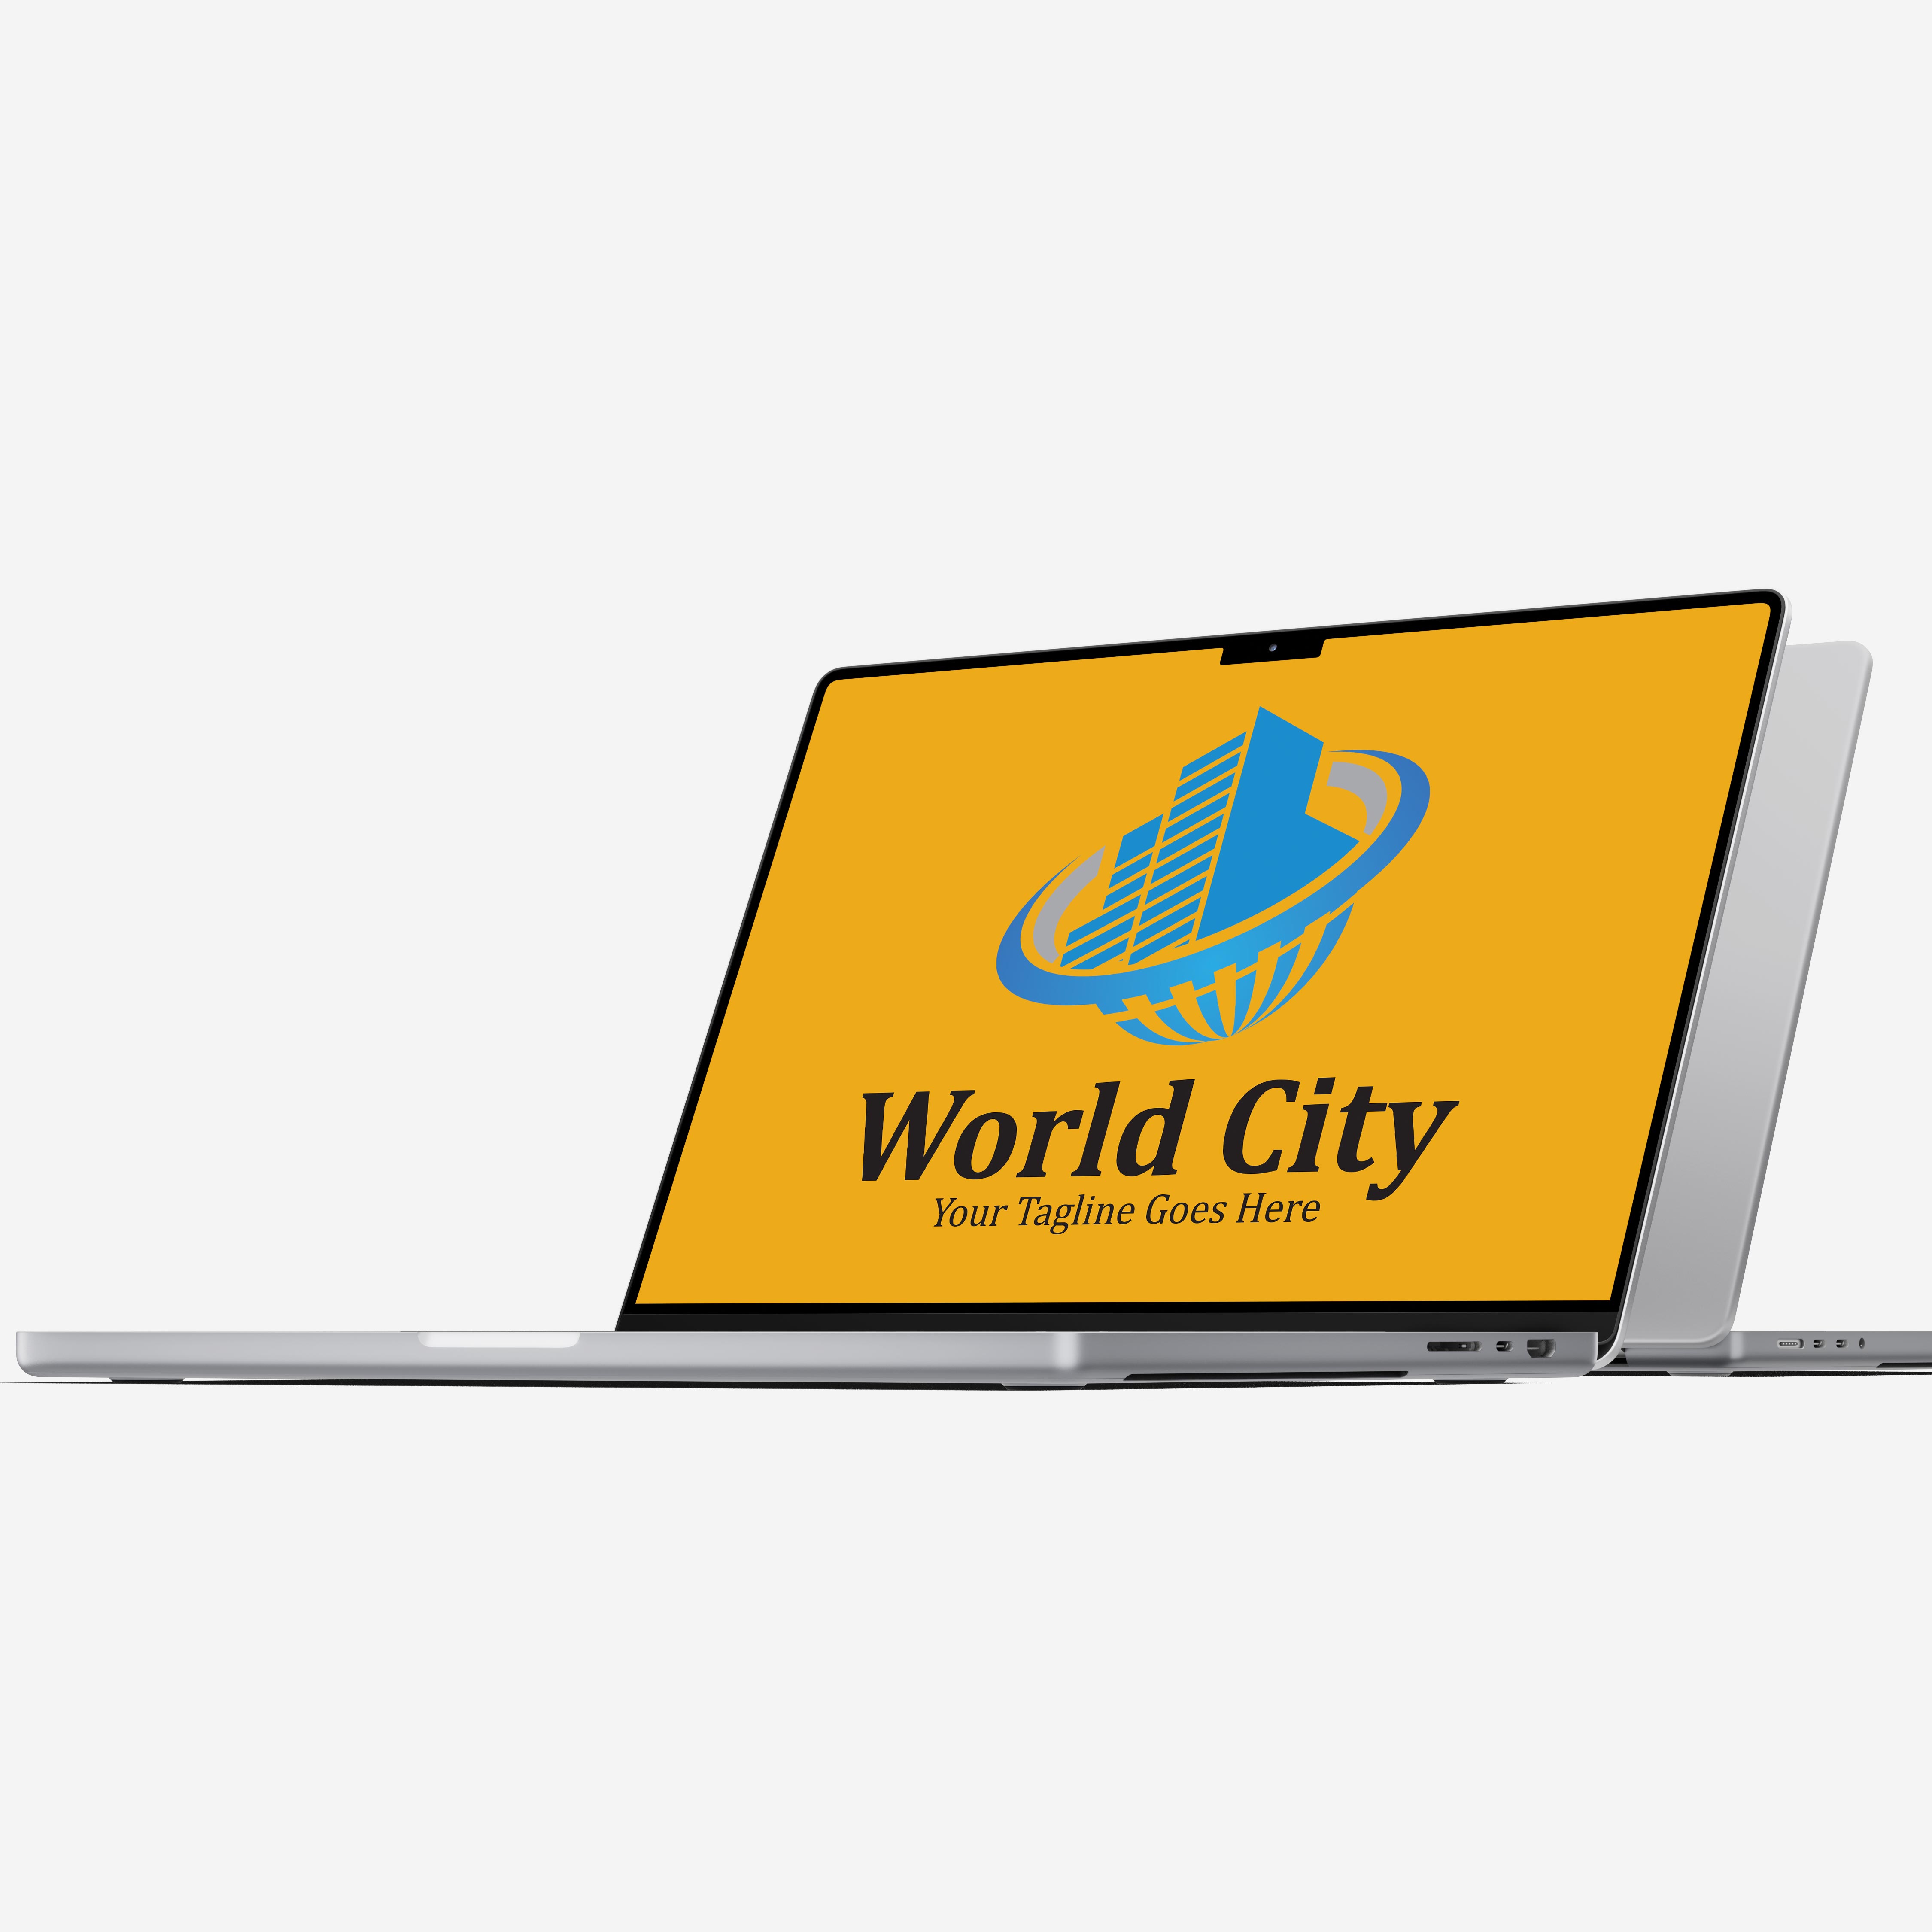 World City Logo Template macbook mockup example.